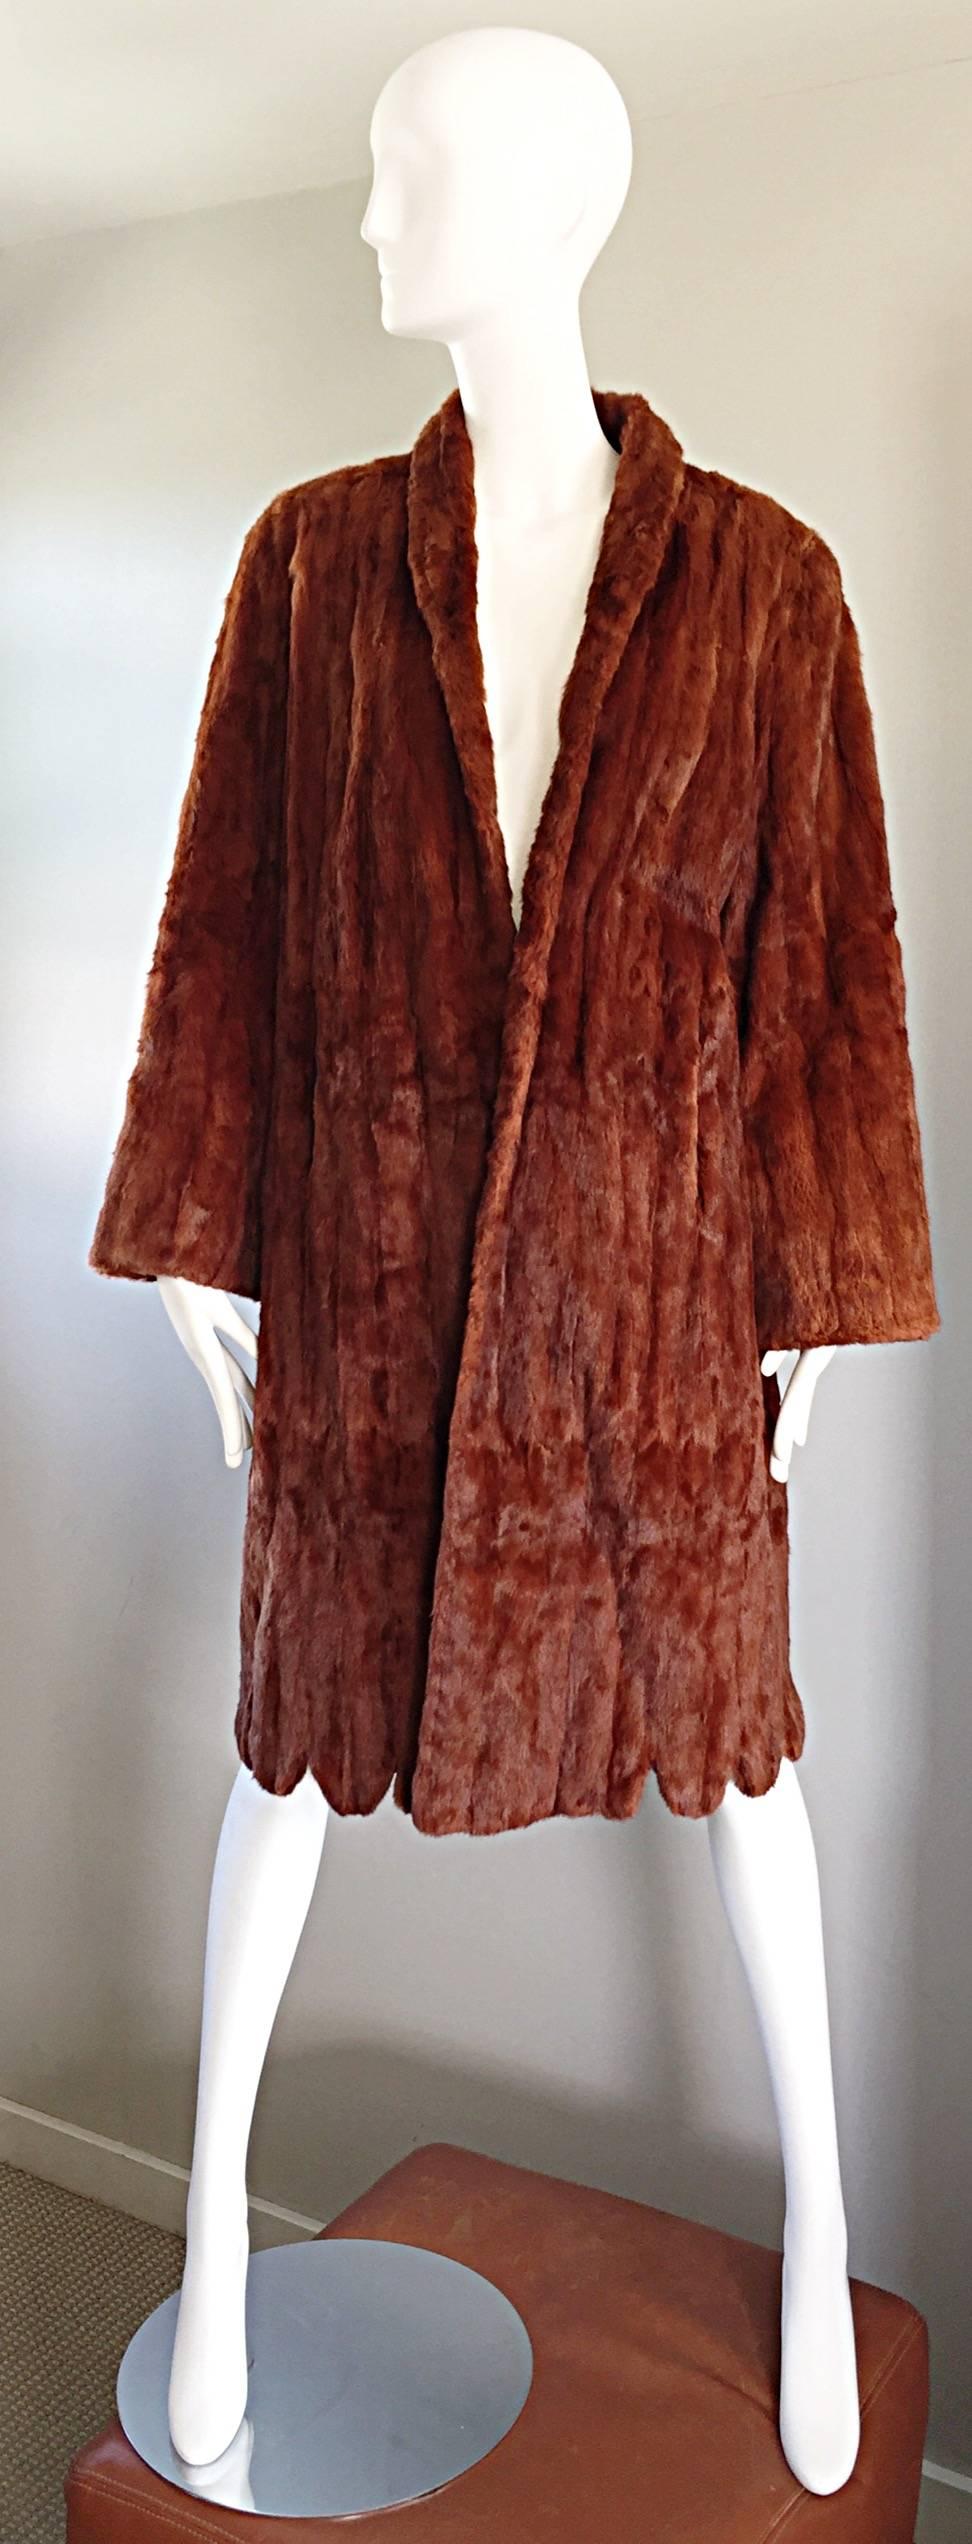 Rare 1940s Ermine Summer Fur Luxurious Honey Brown Jacket Coat Scalloped Edges For Sale 6